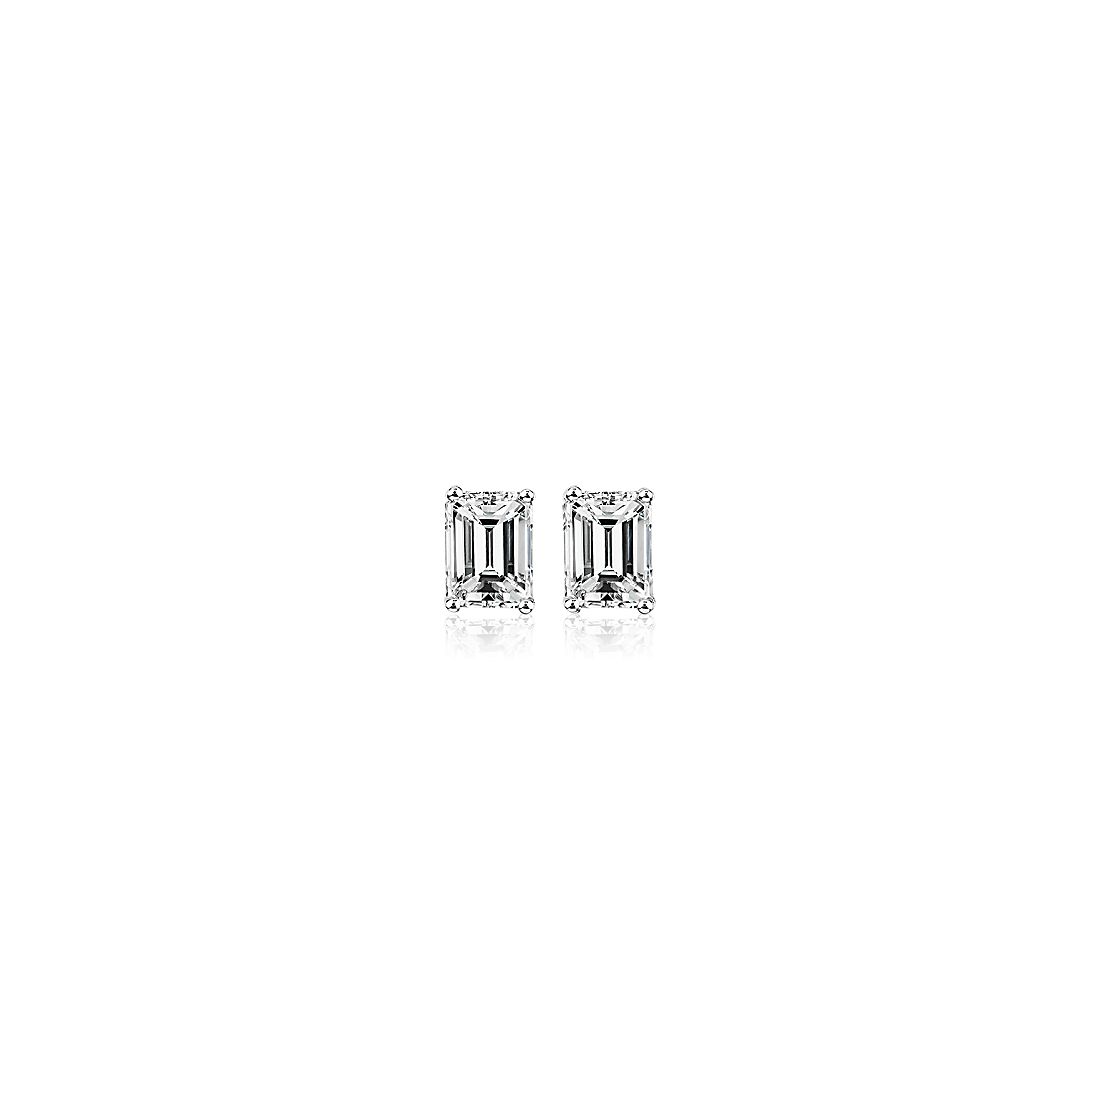 Emerald-Cut Diamond Stud Earrings in 14k White Gold - G/SI2 (5/8 ct. tw.)